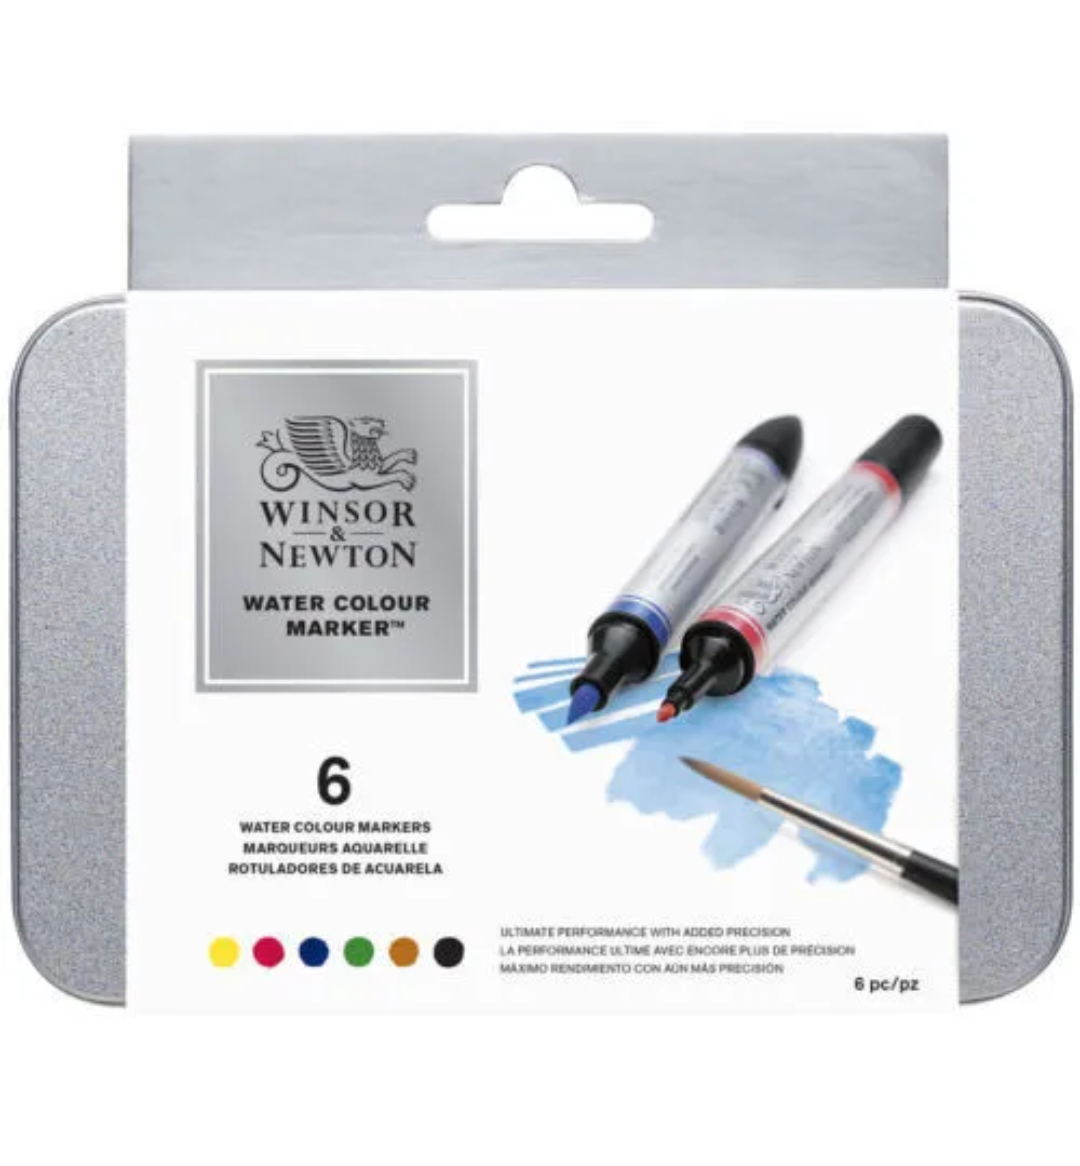 Winsor & Newton Water Colour Marker Pens x 6